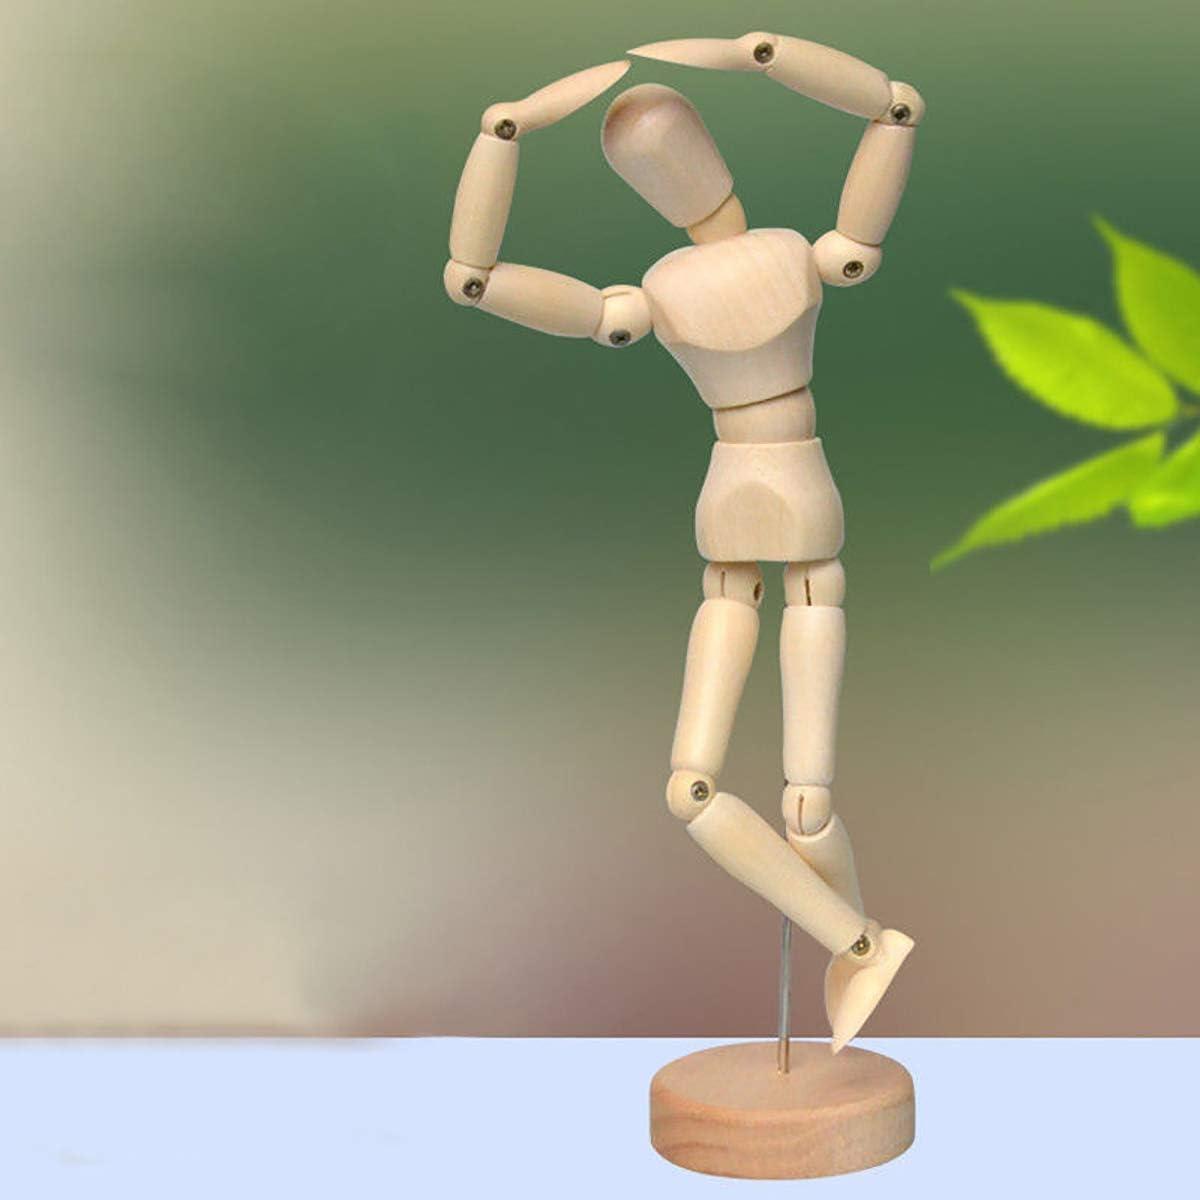 Bandai to release life-like posable plastic figures to help you draw  “realistic” epic poses | SoraNews24 -Japan News-